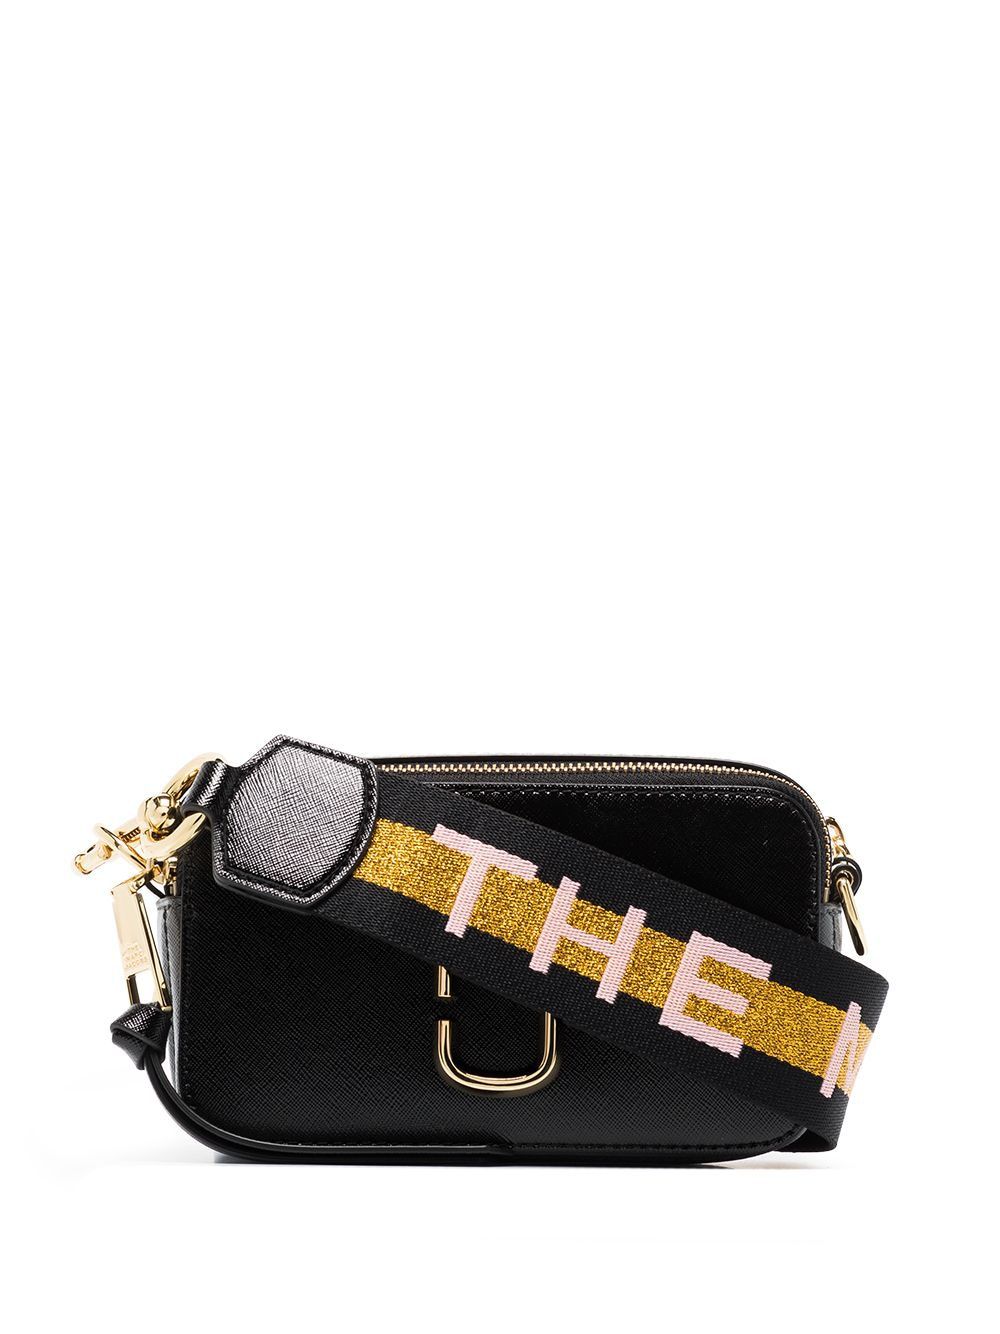 Marc Jacobs Women's Snapshot Camera Bag, Black Multi, One Size M0014146-003